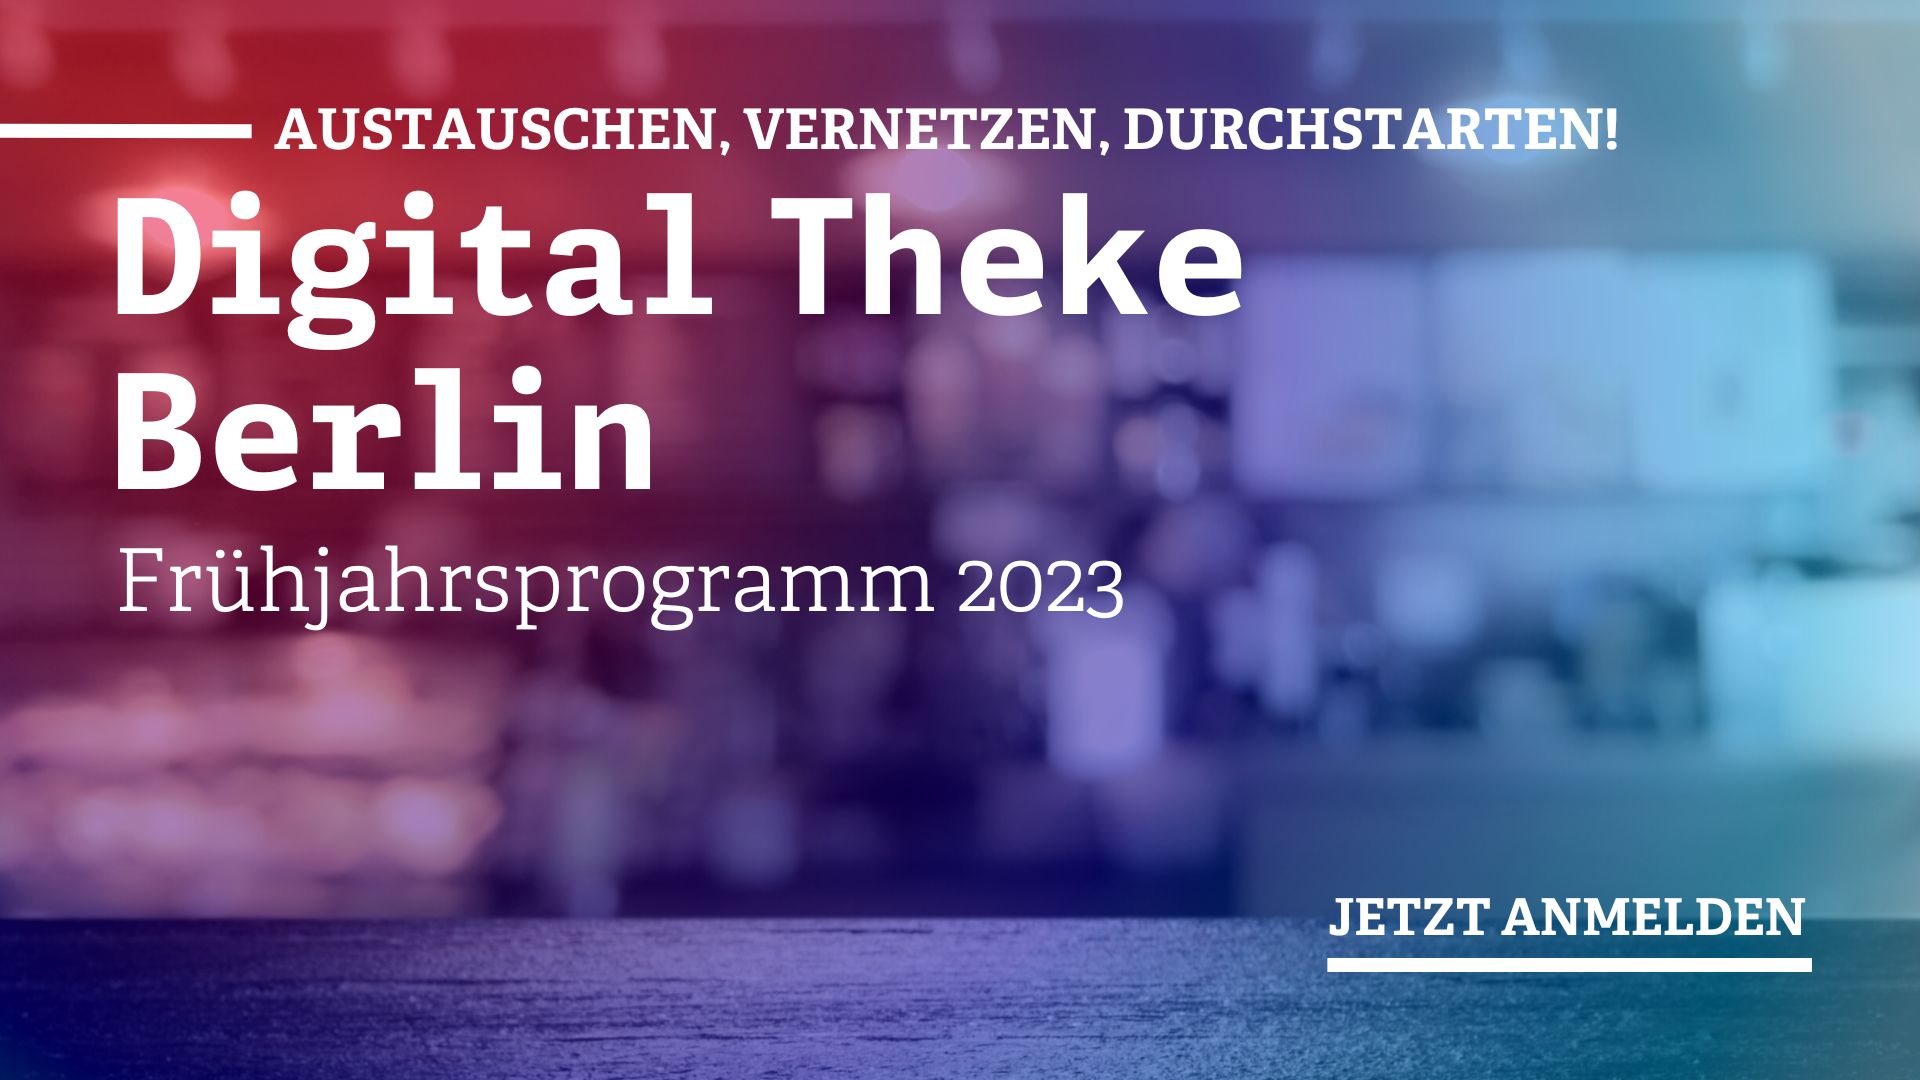 Digital Theke Berlin | Digitalagentur Berlin